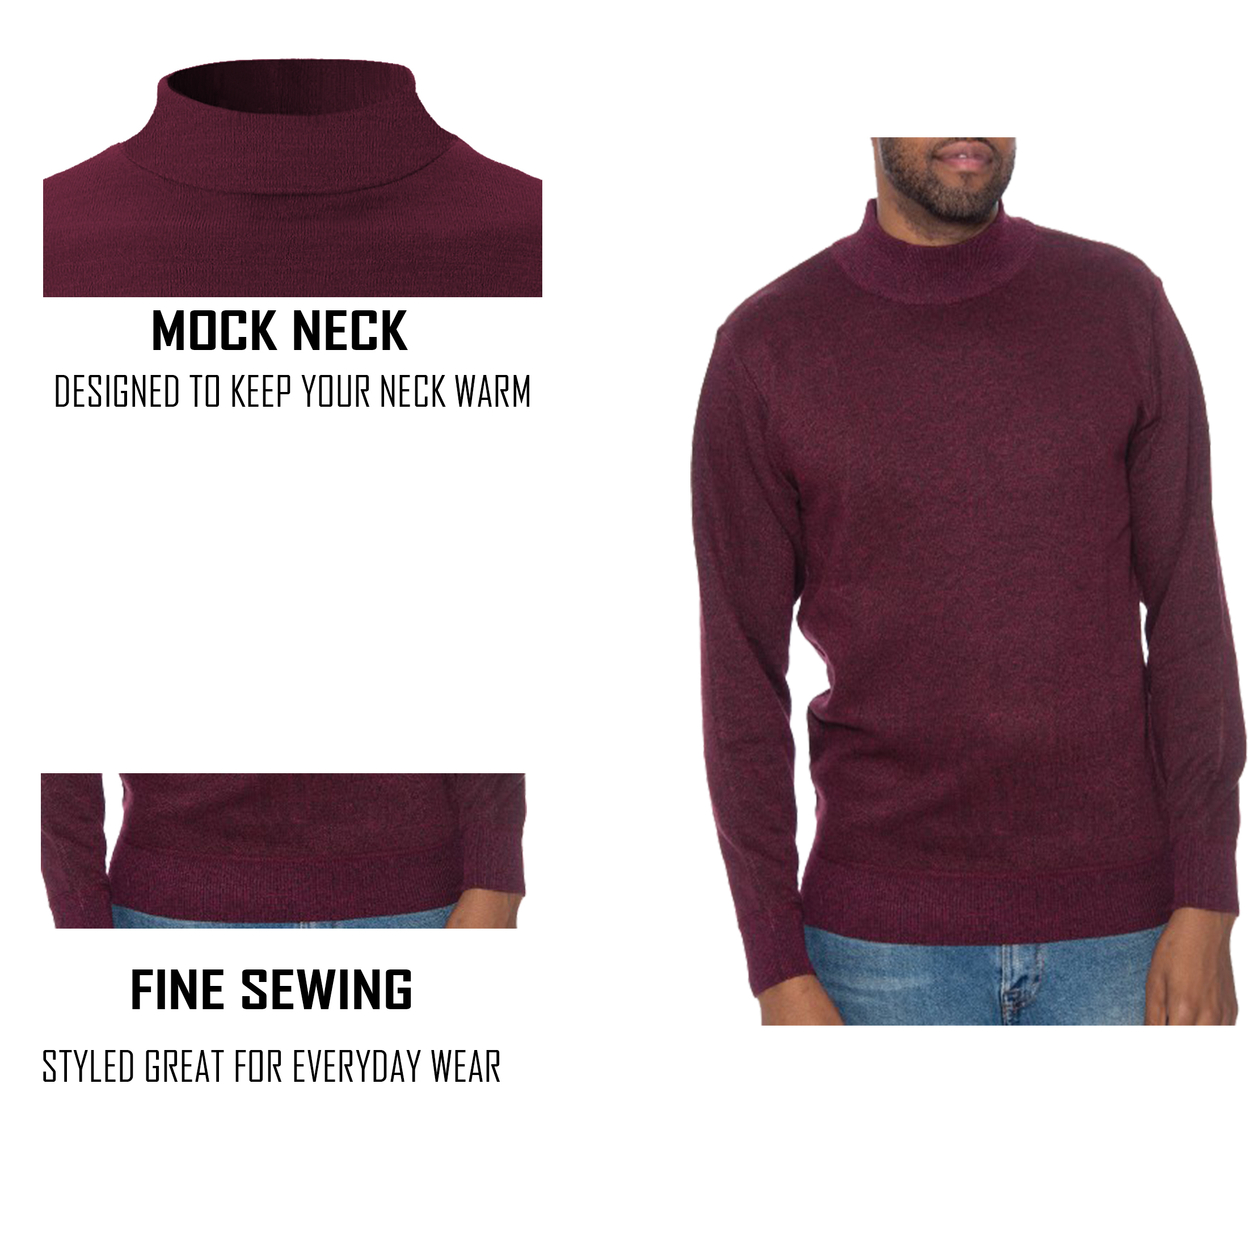 2-Pack: Men's Winter Warm Cozy Knit Slim Fit Mock Neck Sweater - Black & Black, Small